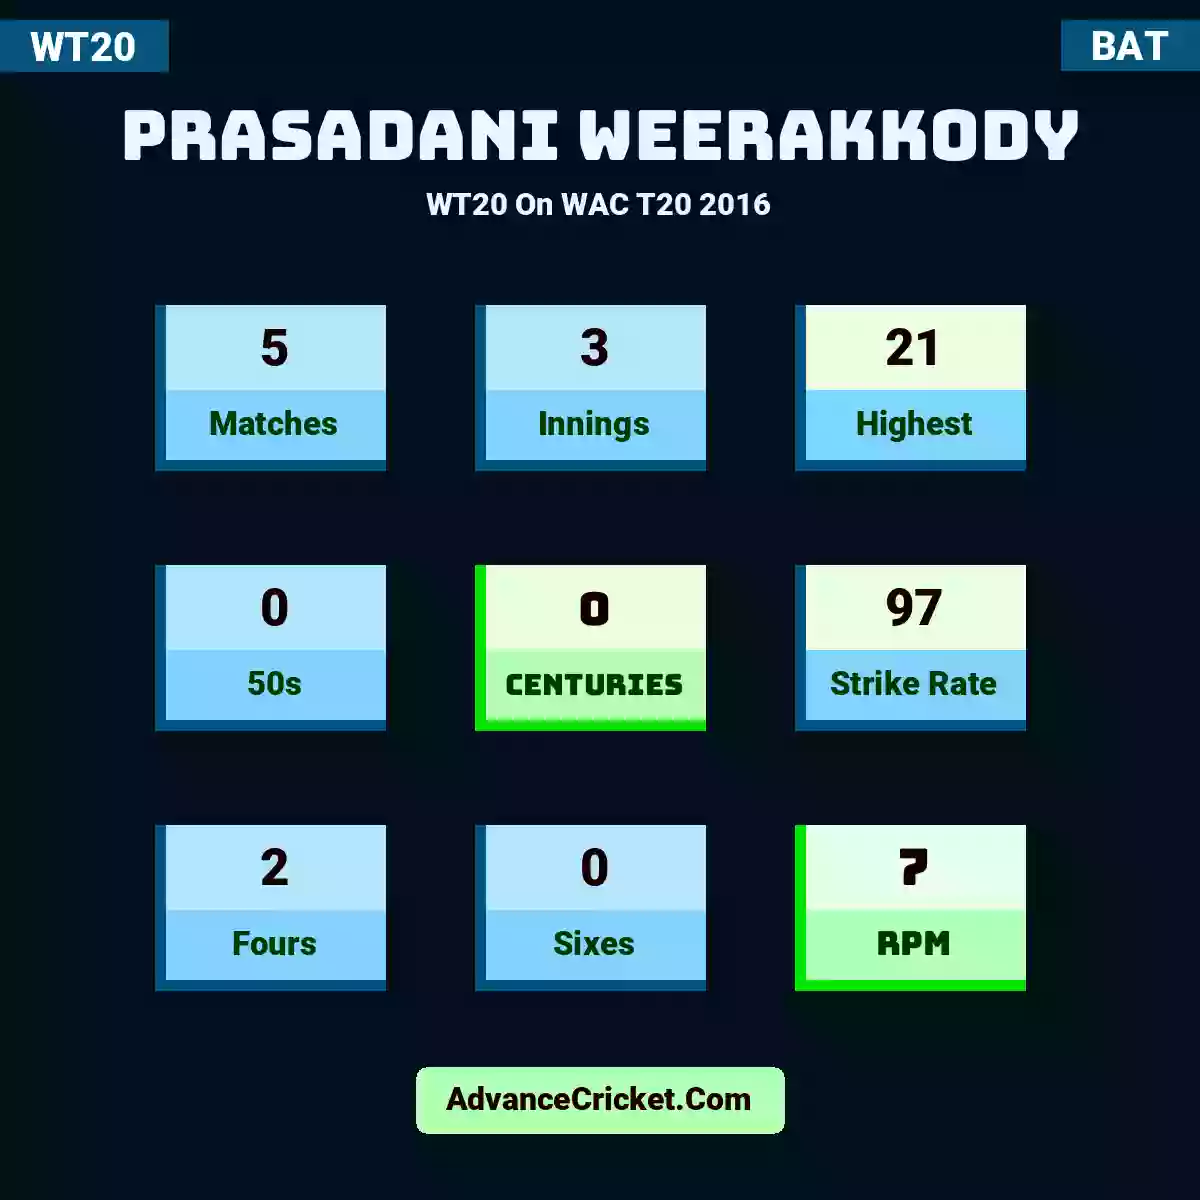 Prasadani Weerakkody WT20  On WAC T20 2016, Prasadani Weerakkody played 5 matches, scored 21 runs as highest, 0 half-centuries, and 0 centuries, with a strike rate of 97. P.Weerakkody hit 2 fours and 0 sixes, with an RPM of 7.